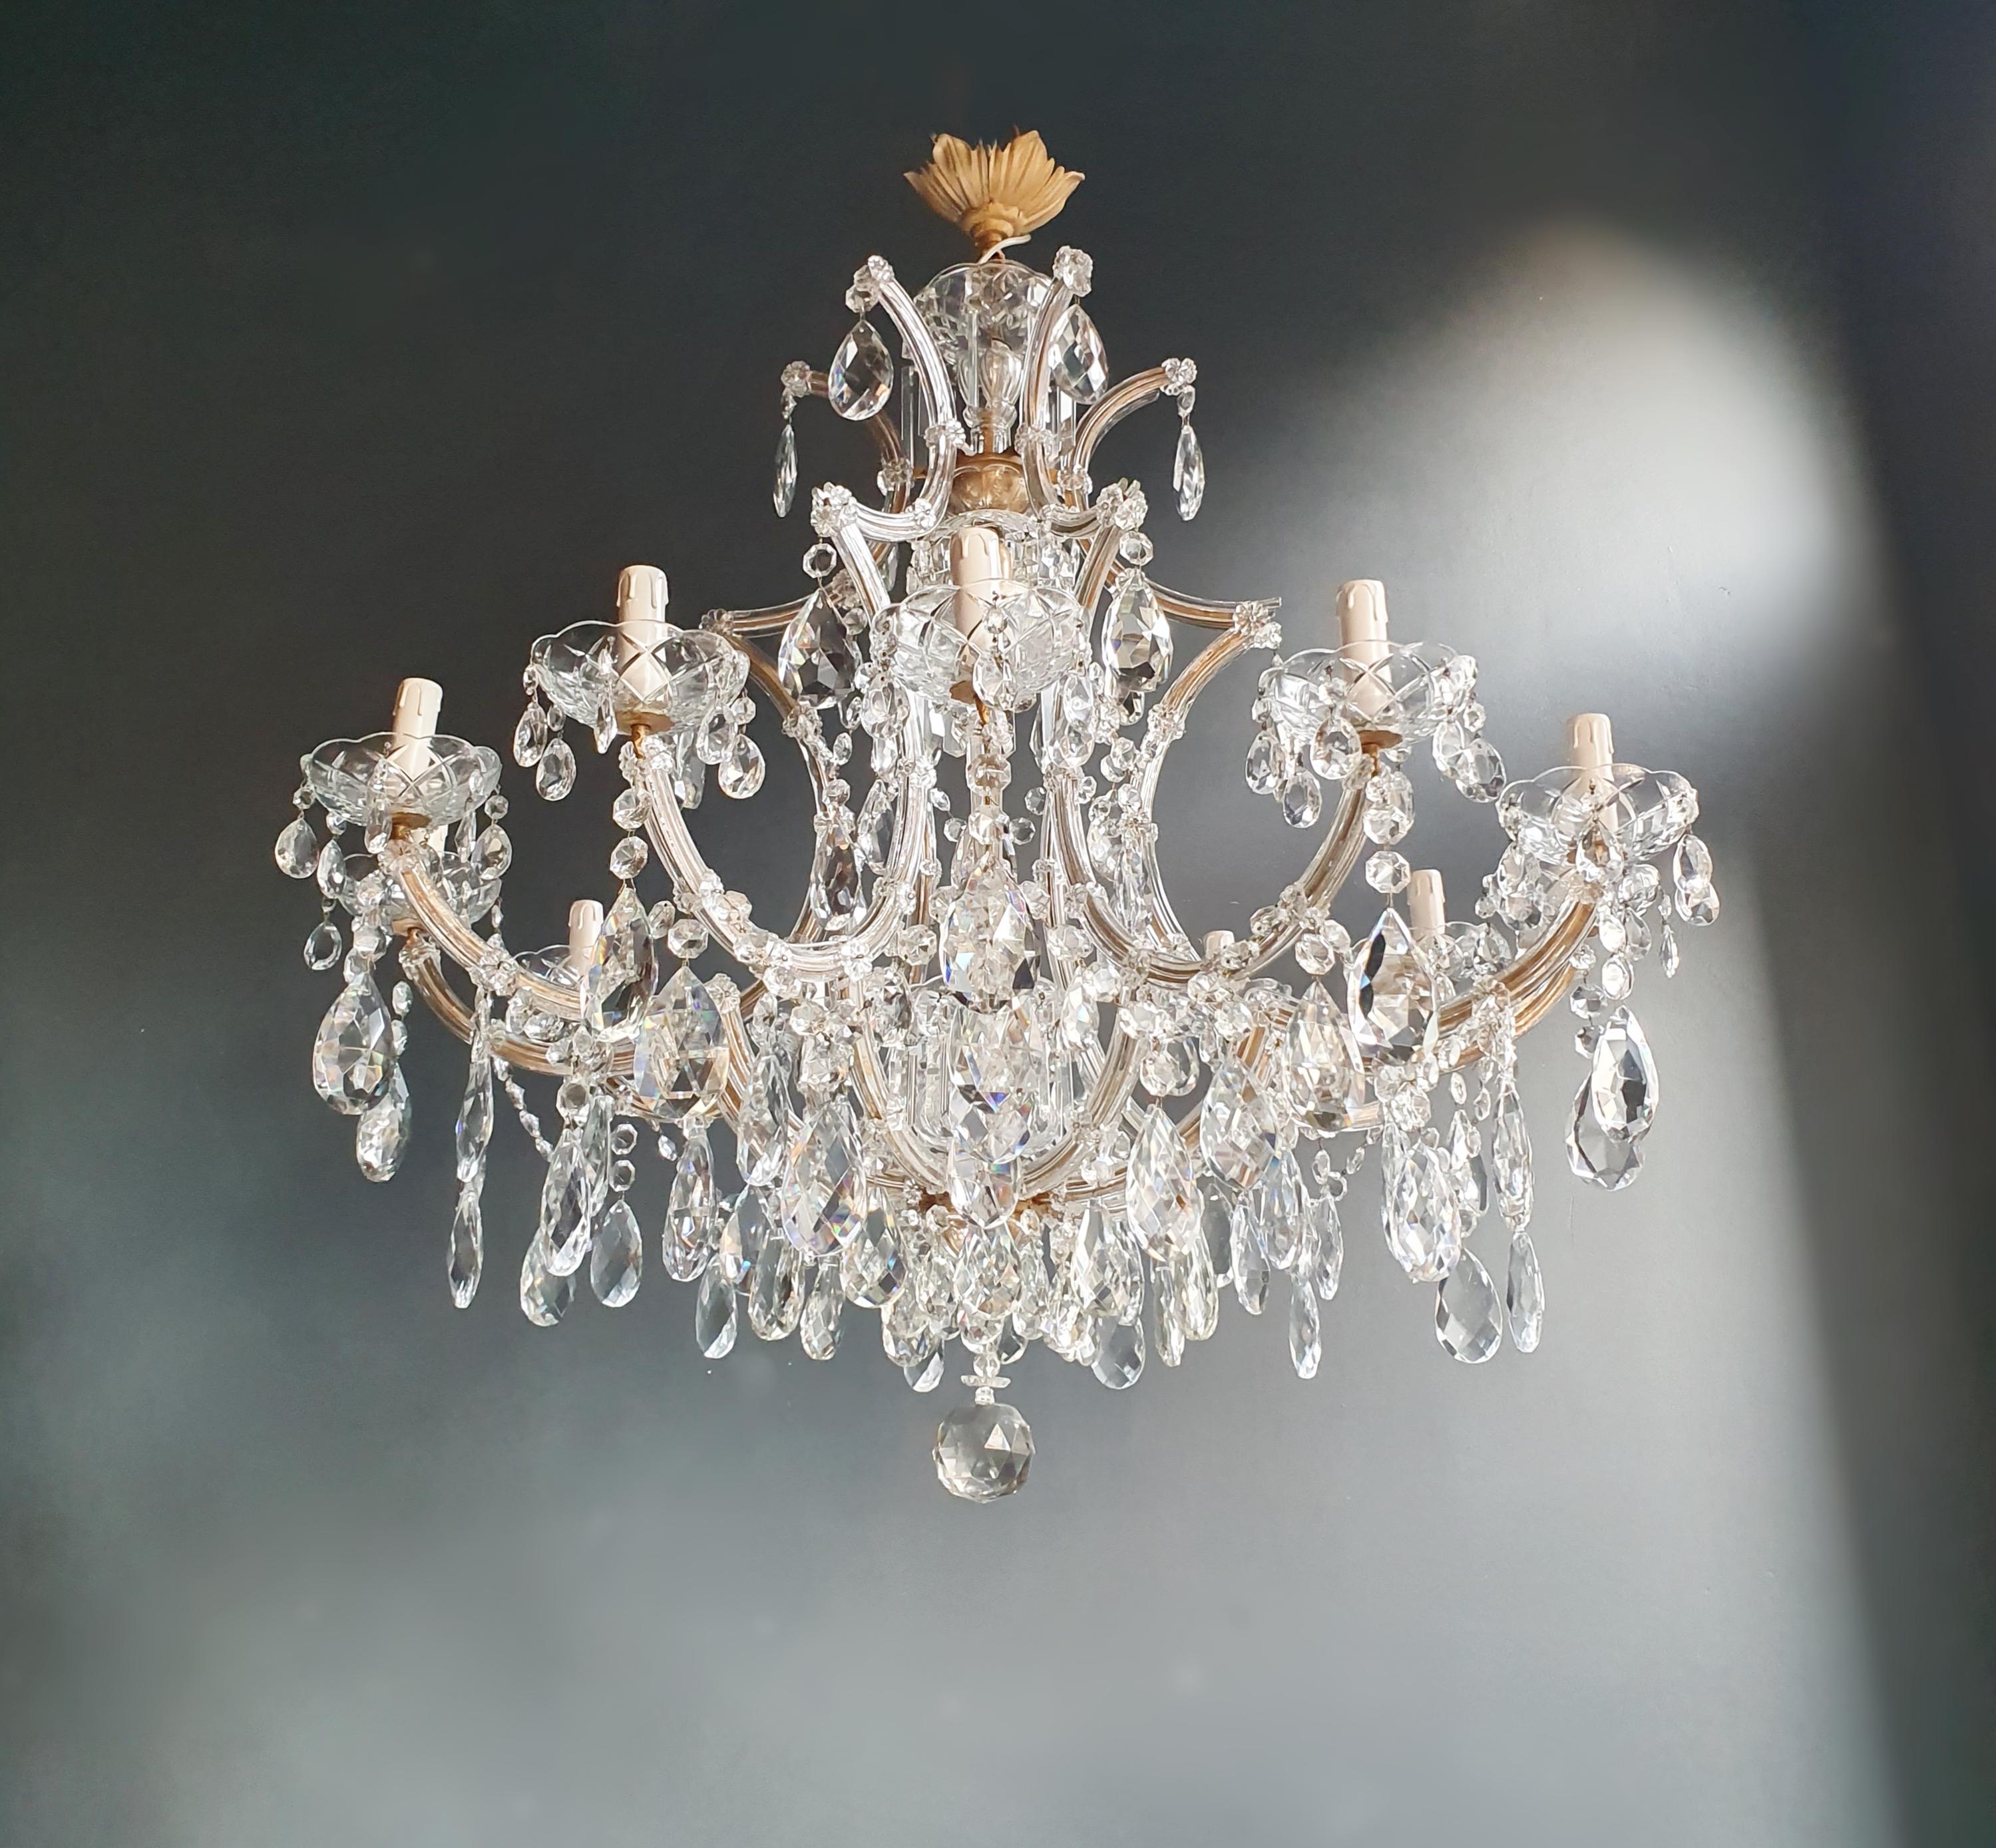 Baroque Maria Theresa Crystal Chandelier Antique Ceiling Lamp Lustre Art Nouveau